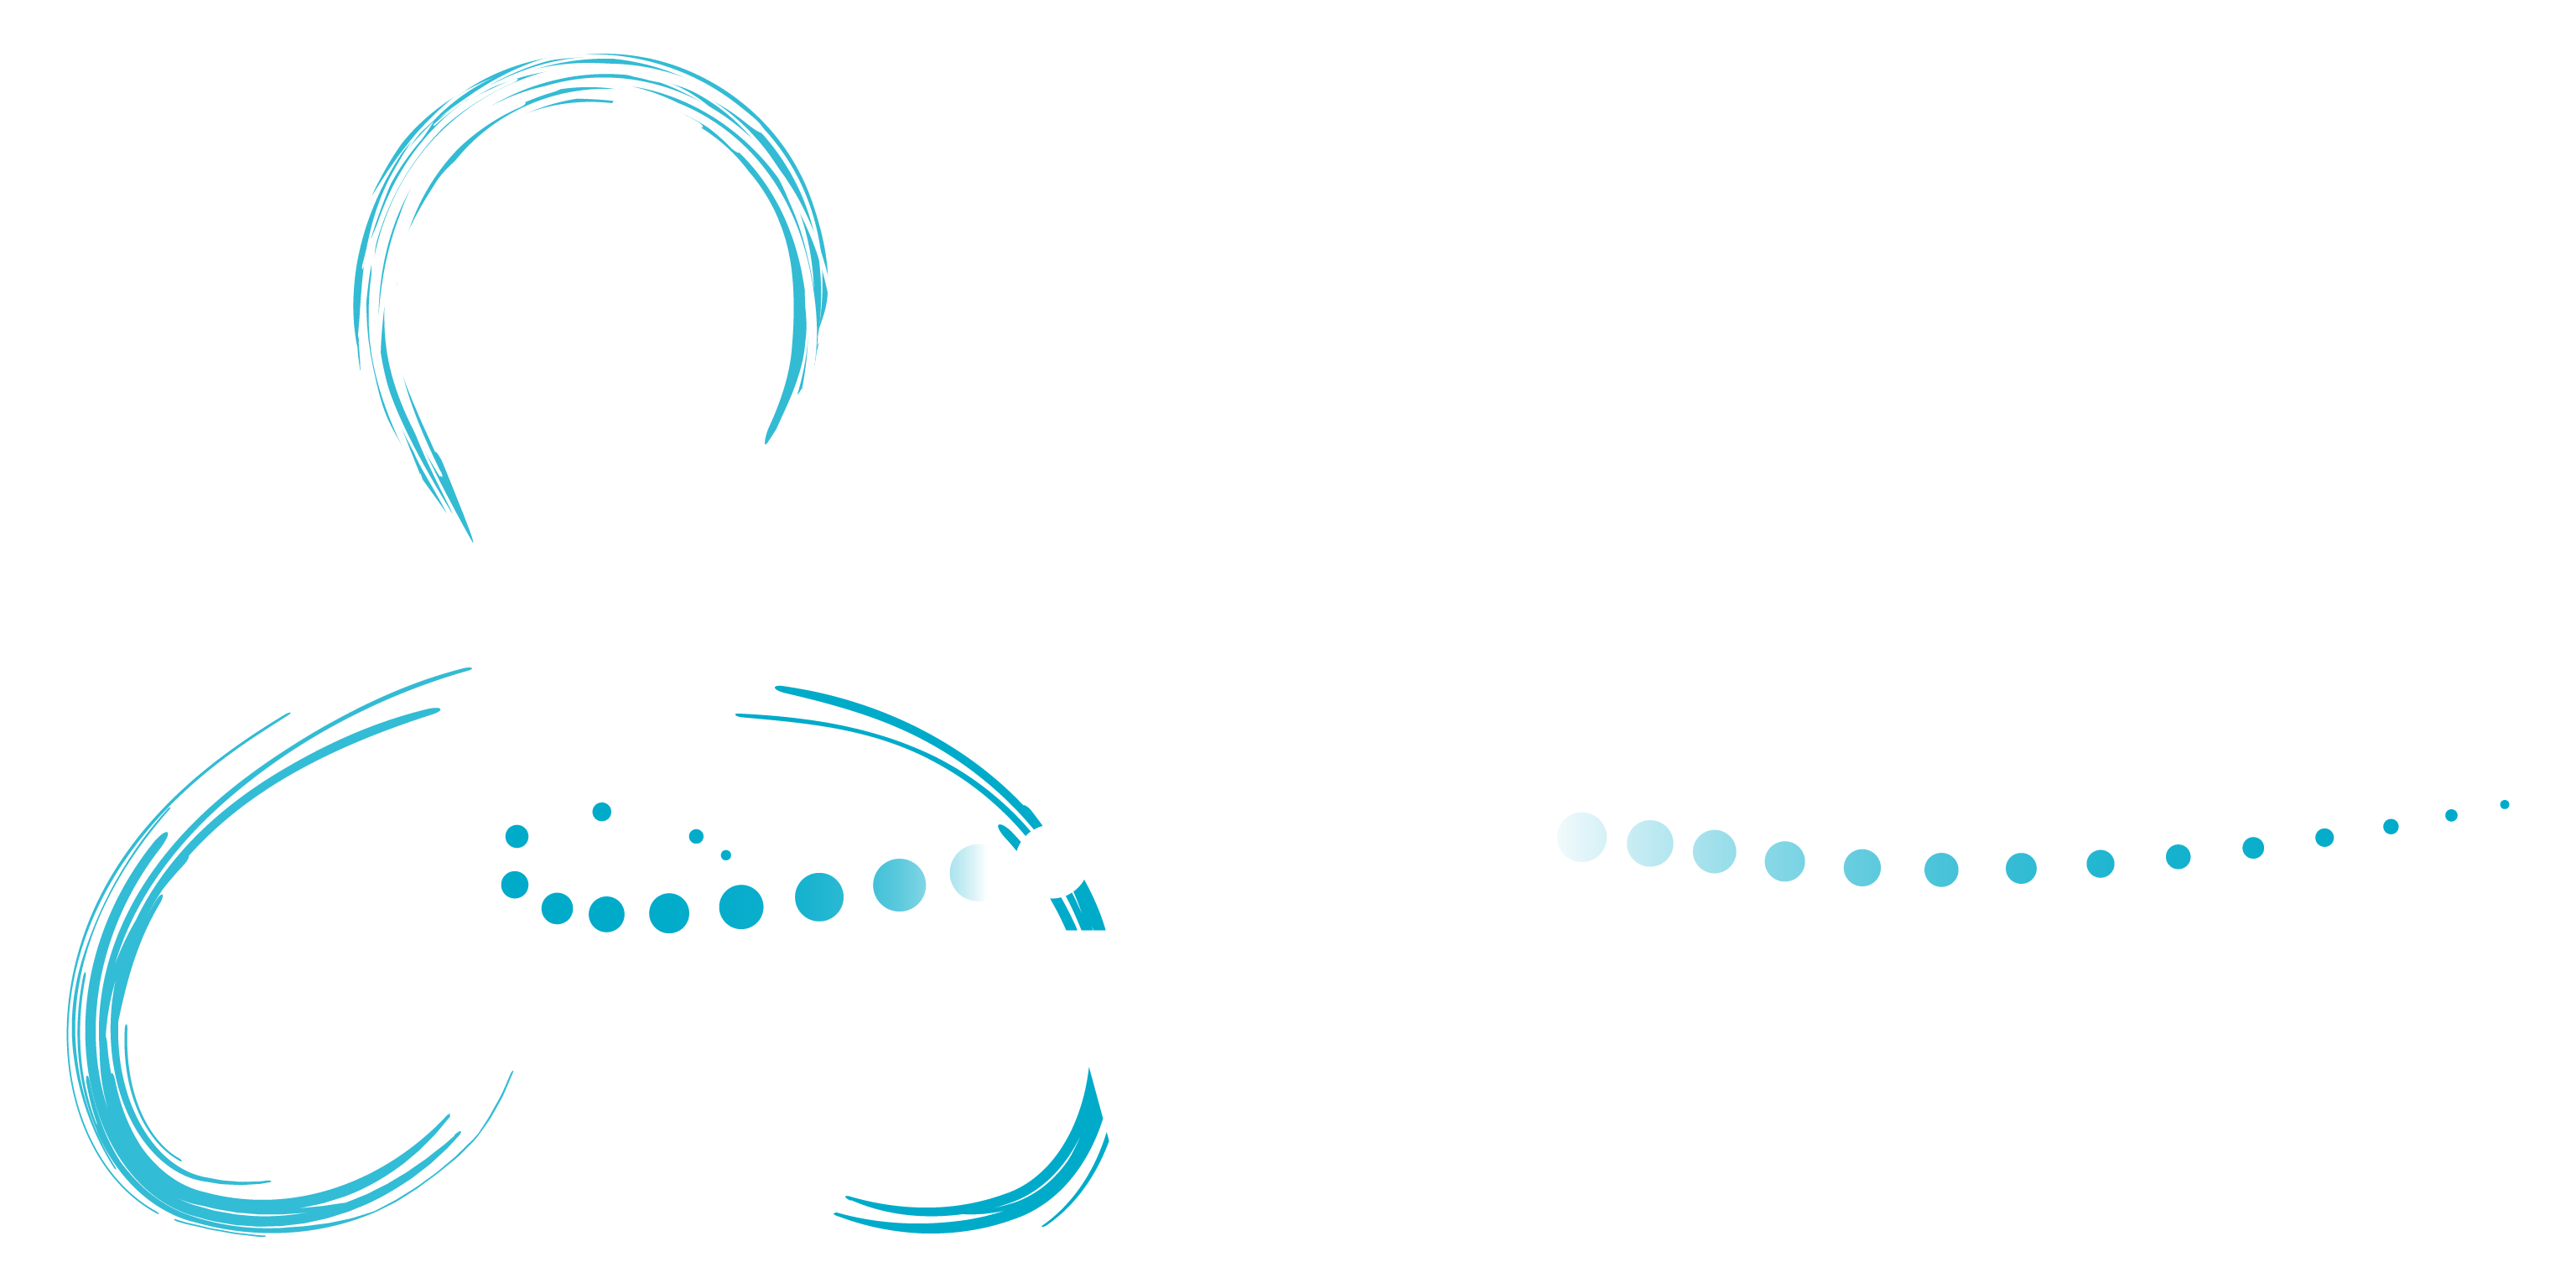 internalize weight loss logo wihite